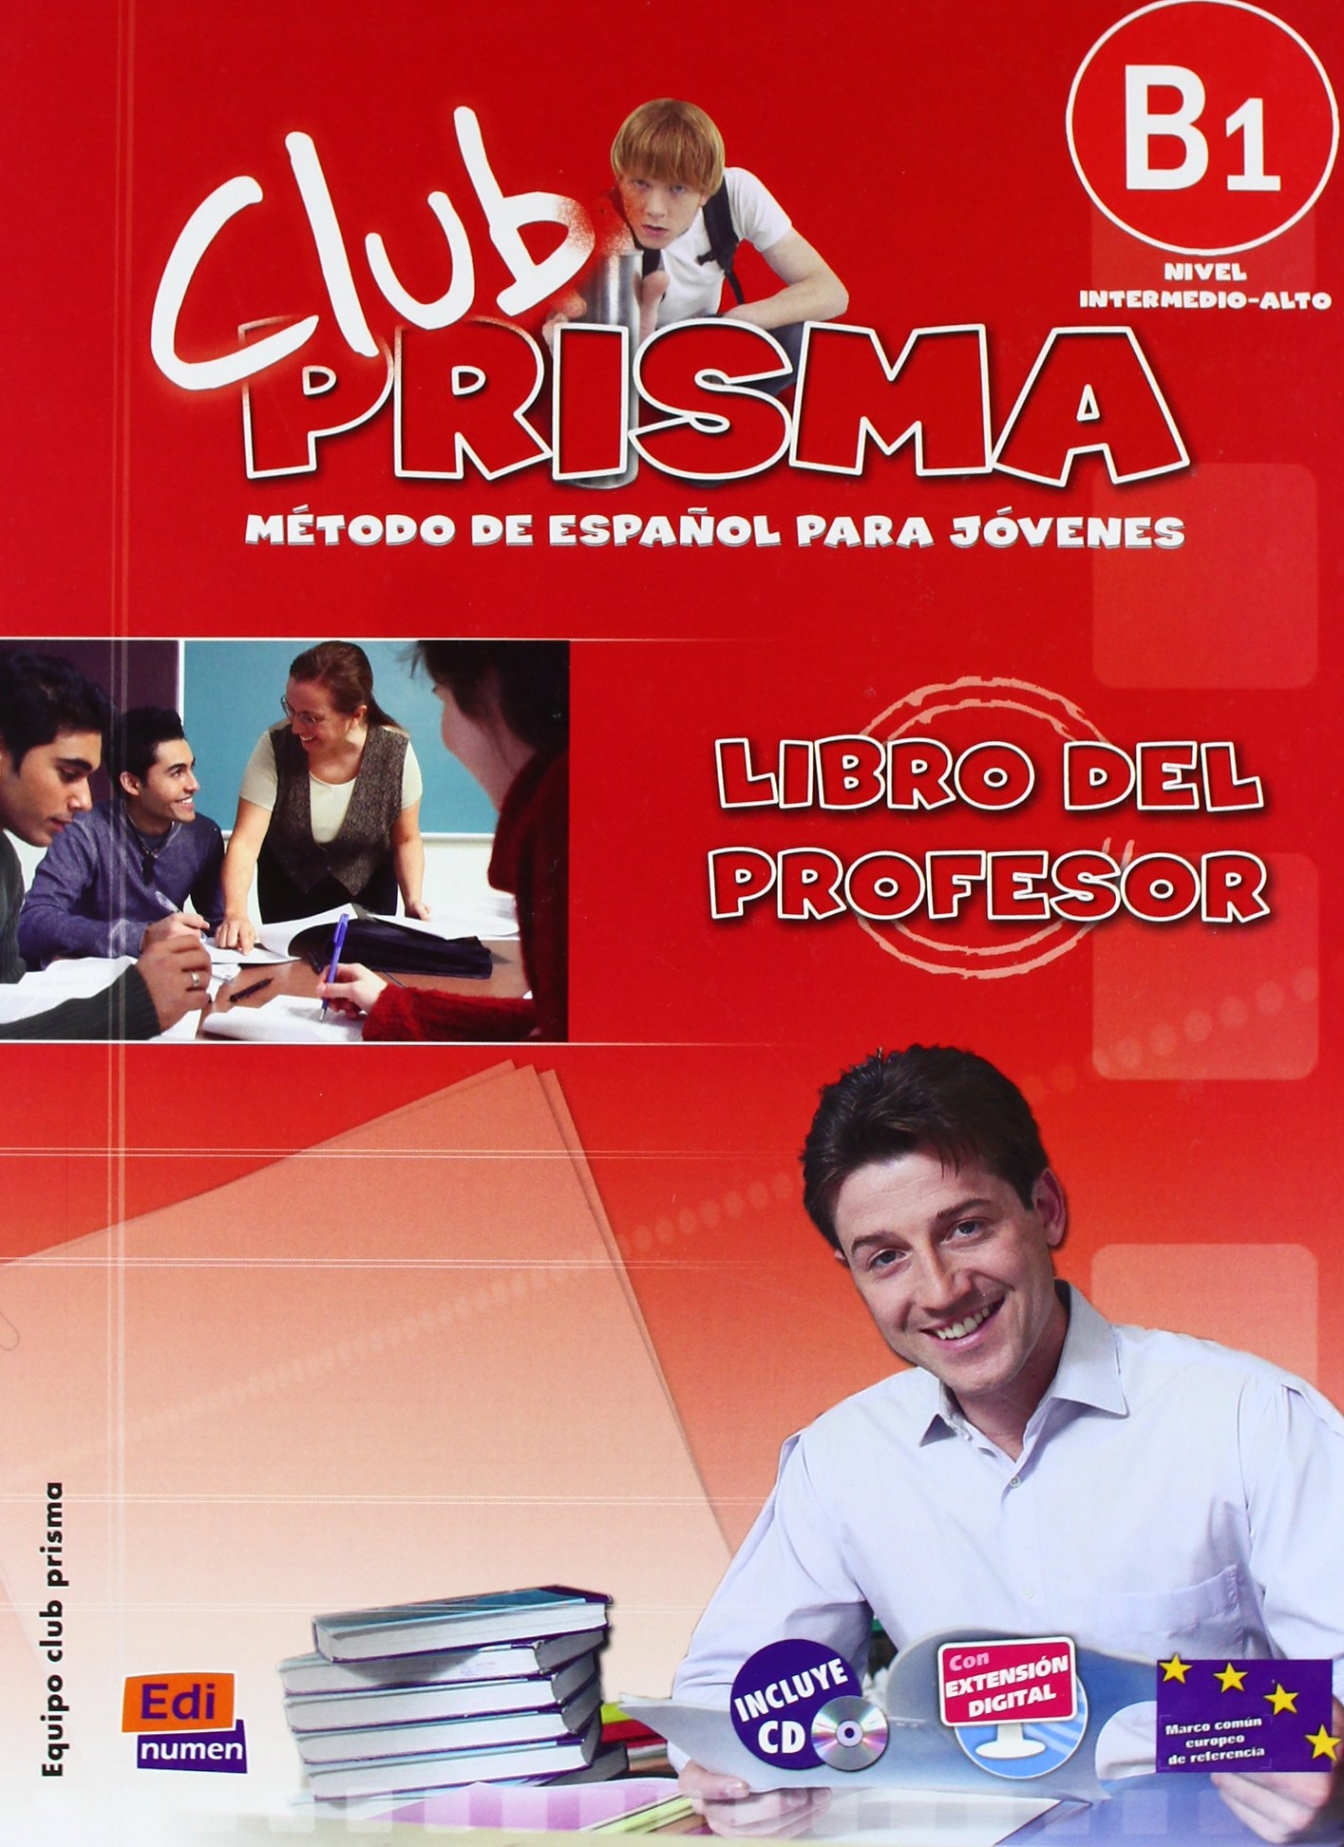  : Maria Jose Gelabert Club Prisma Nivel B1 - Libro del profesor + CD de audiciones 